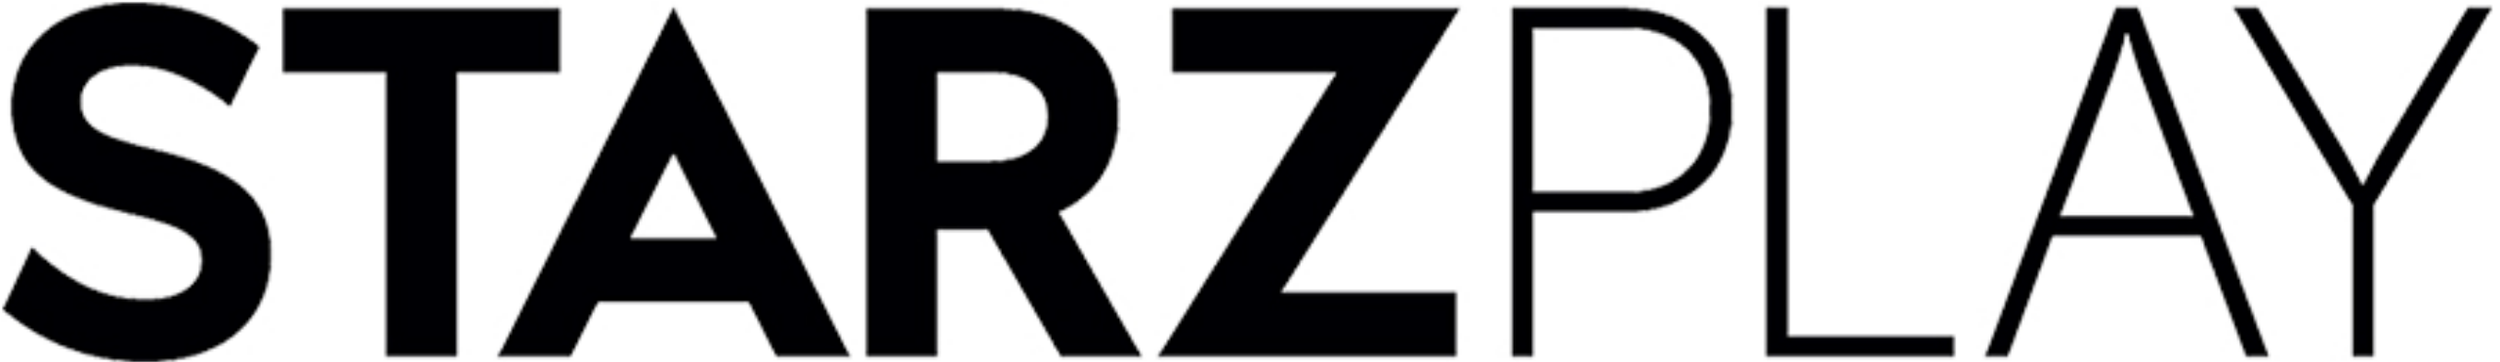 2560px-Starzplay-logo.svg.png